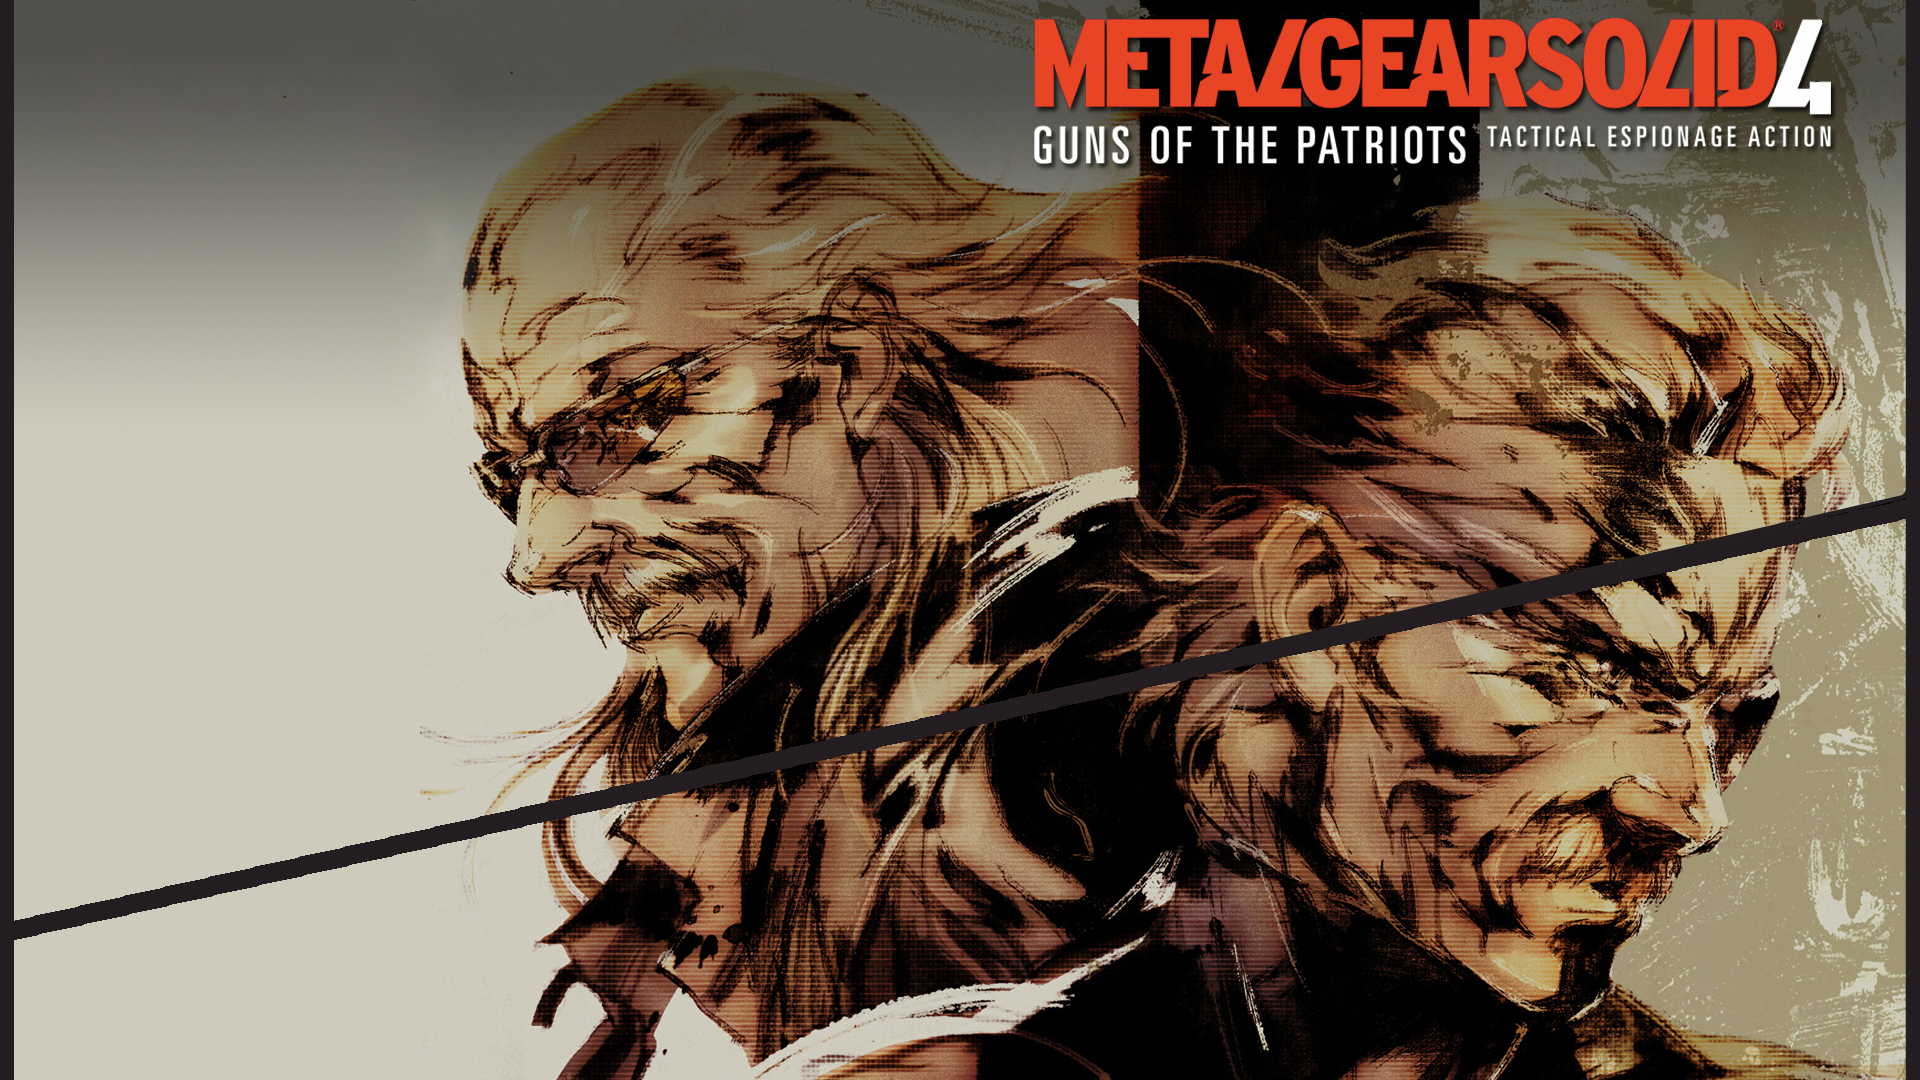 Metal Gear, видеоигры, Metal Gear Solid, старый змея, Револьвер Оцелот, Metal Gear Solid 4 - обои на рабочий стол